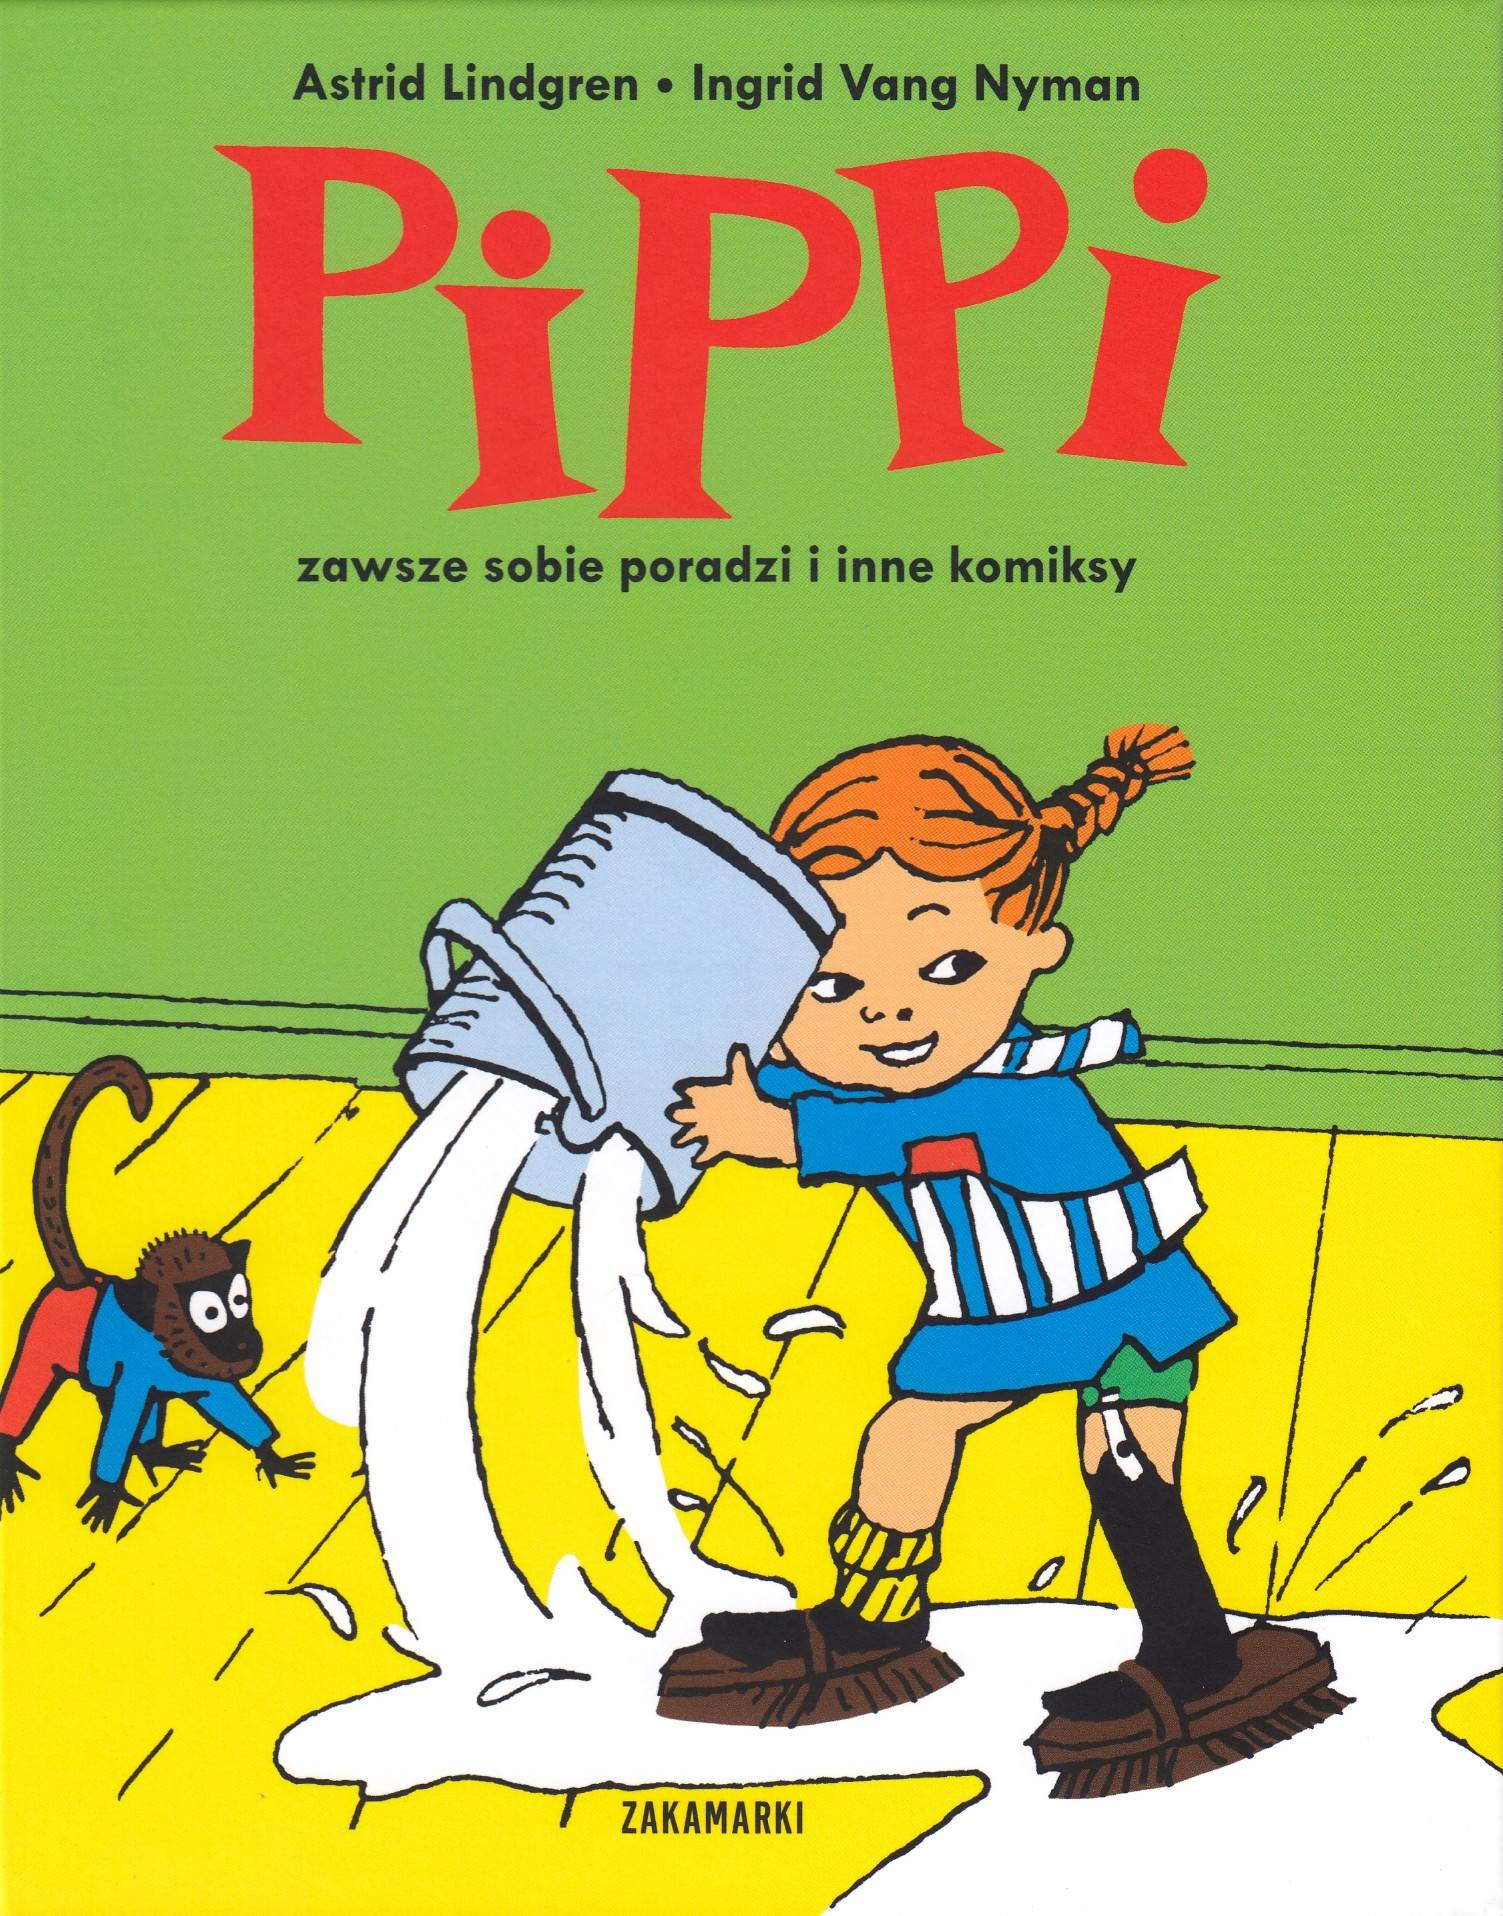 Pippi ordnar allt (Polska)